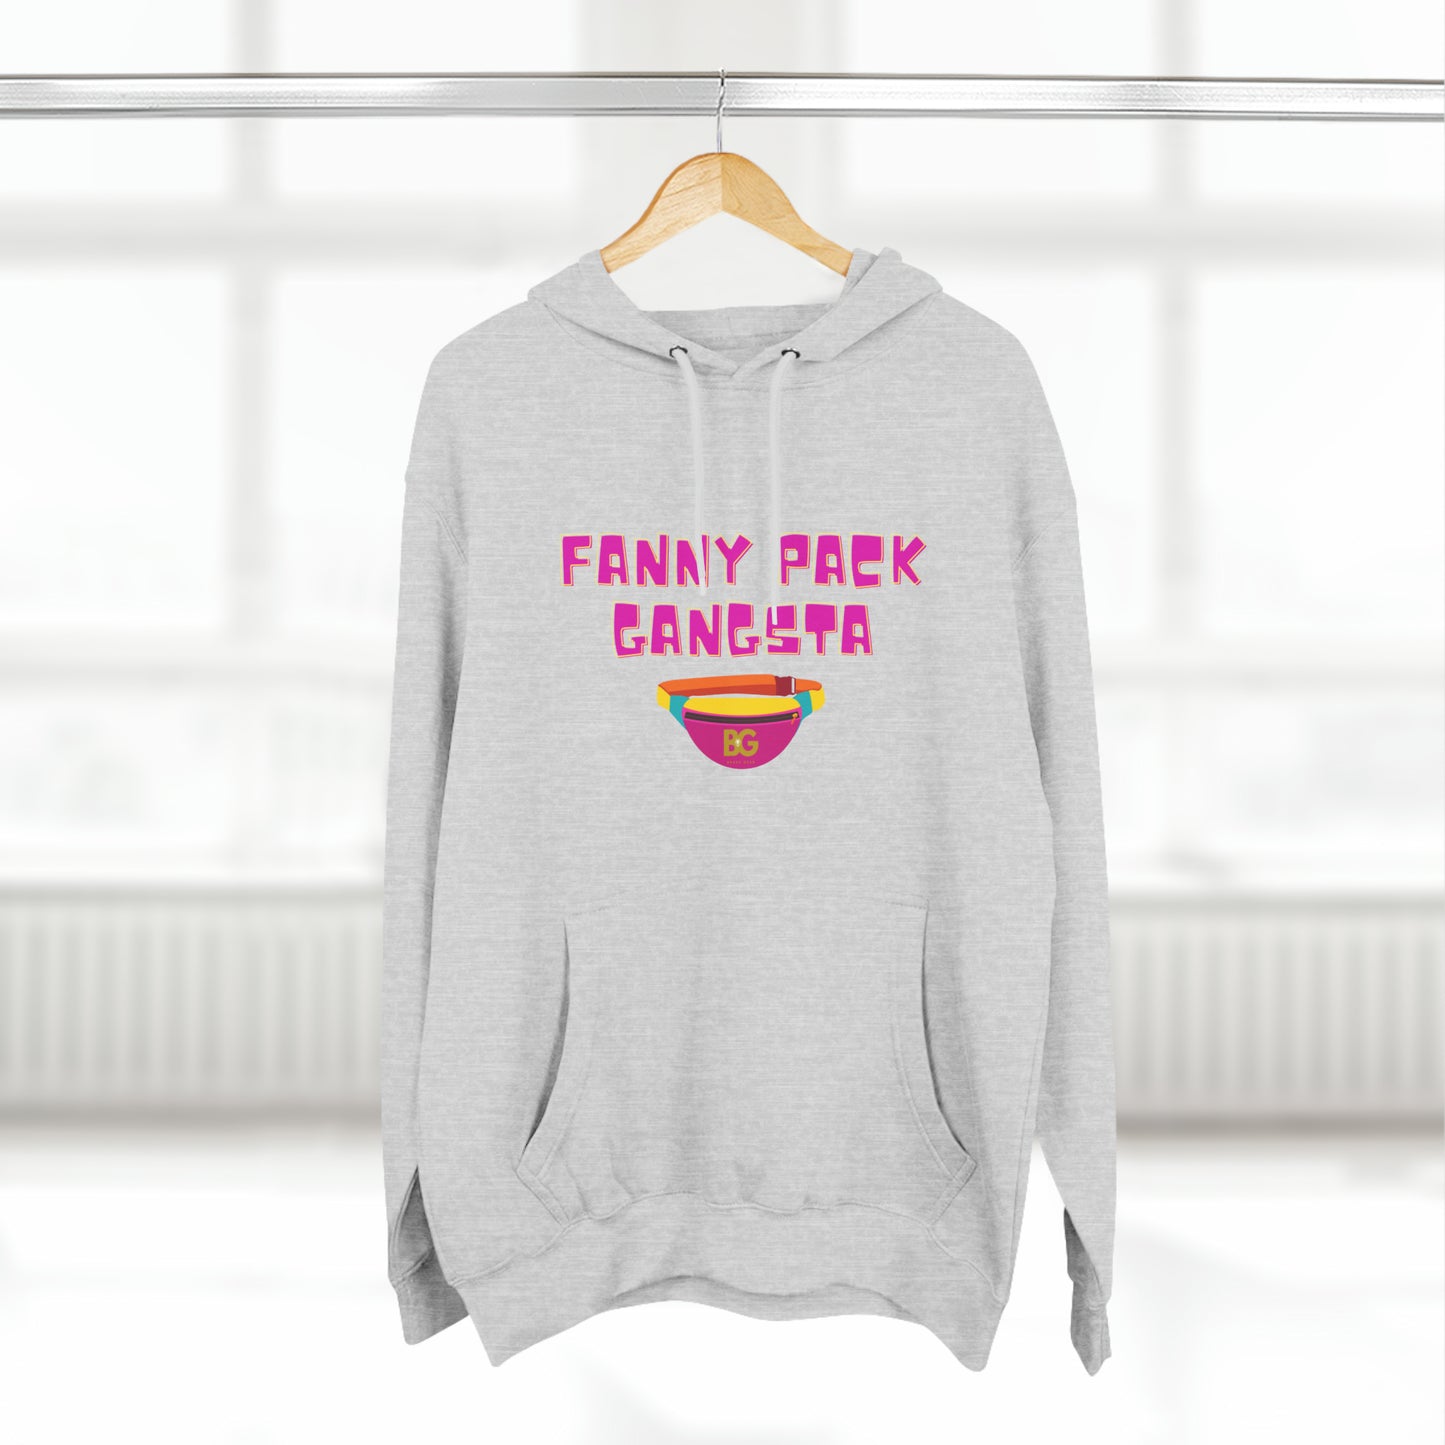 BG "Fanny Pack Gangsta" Premium Pullover Hoodie